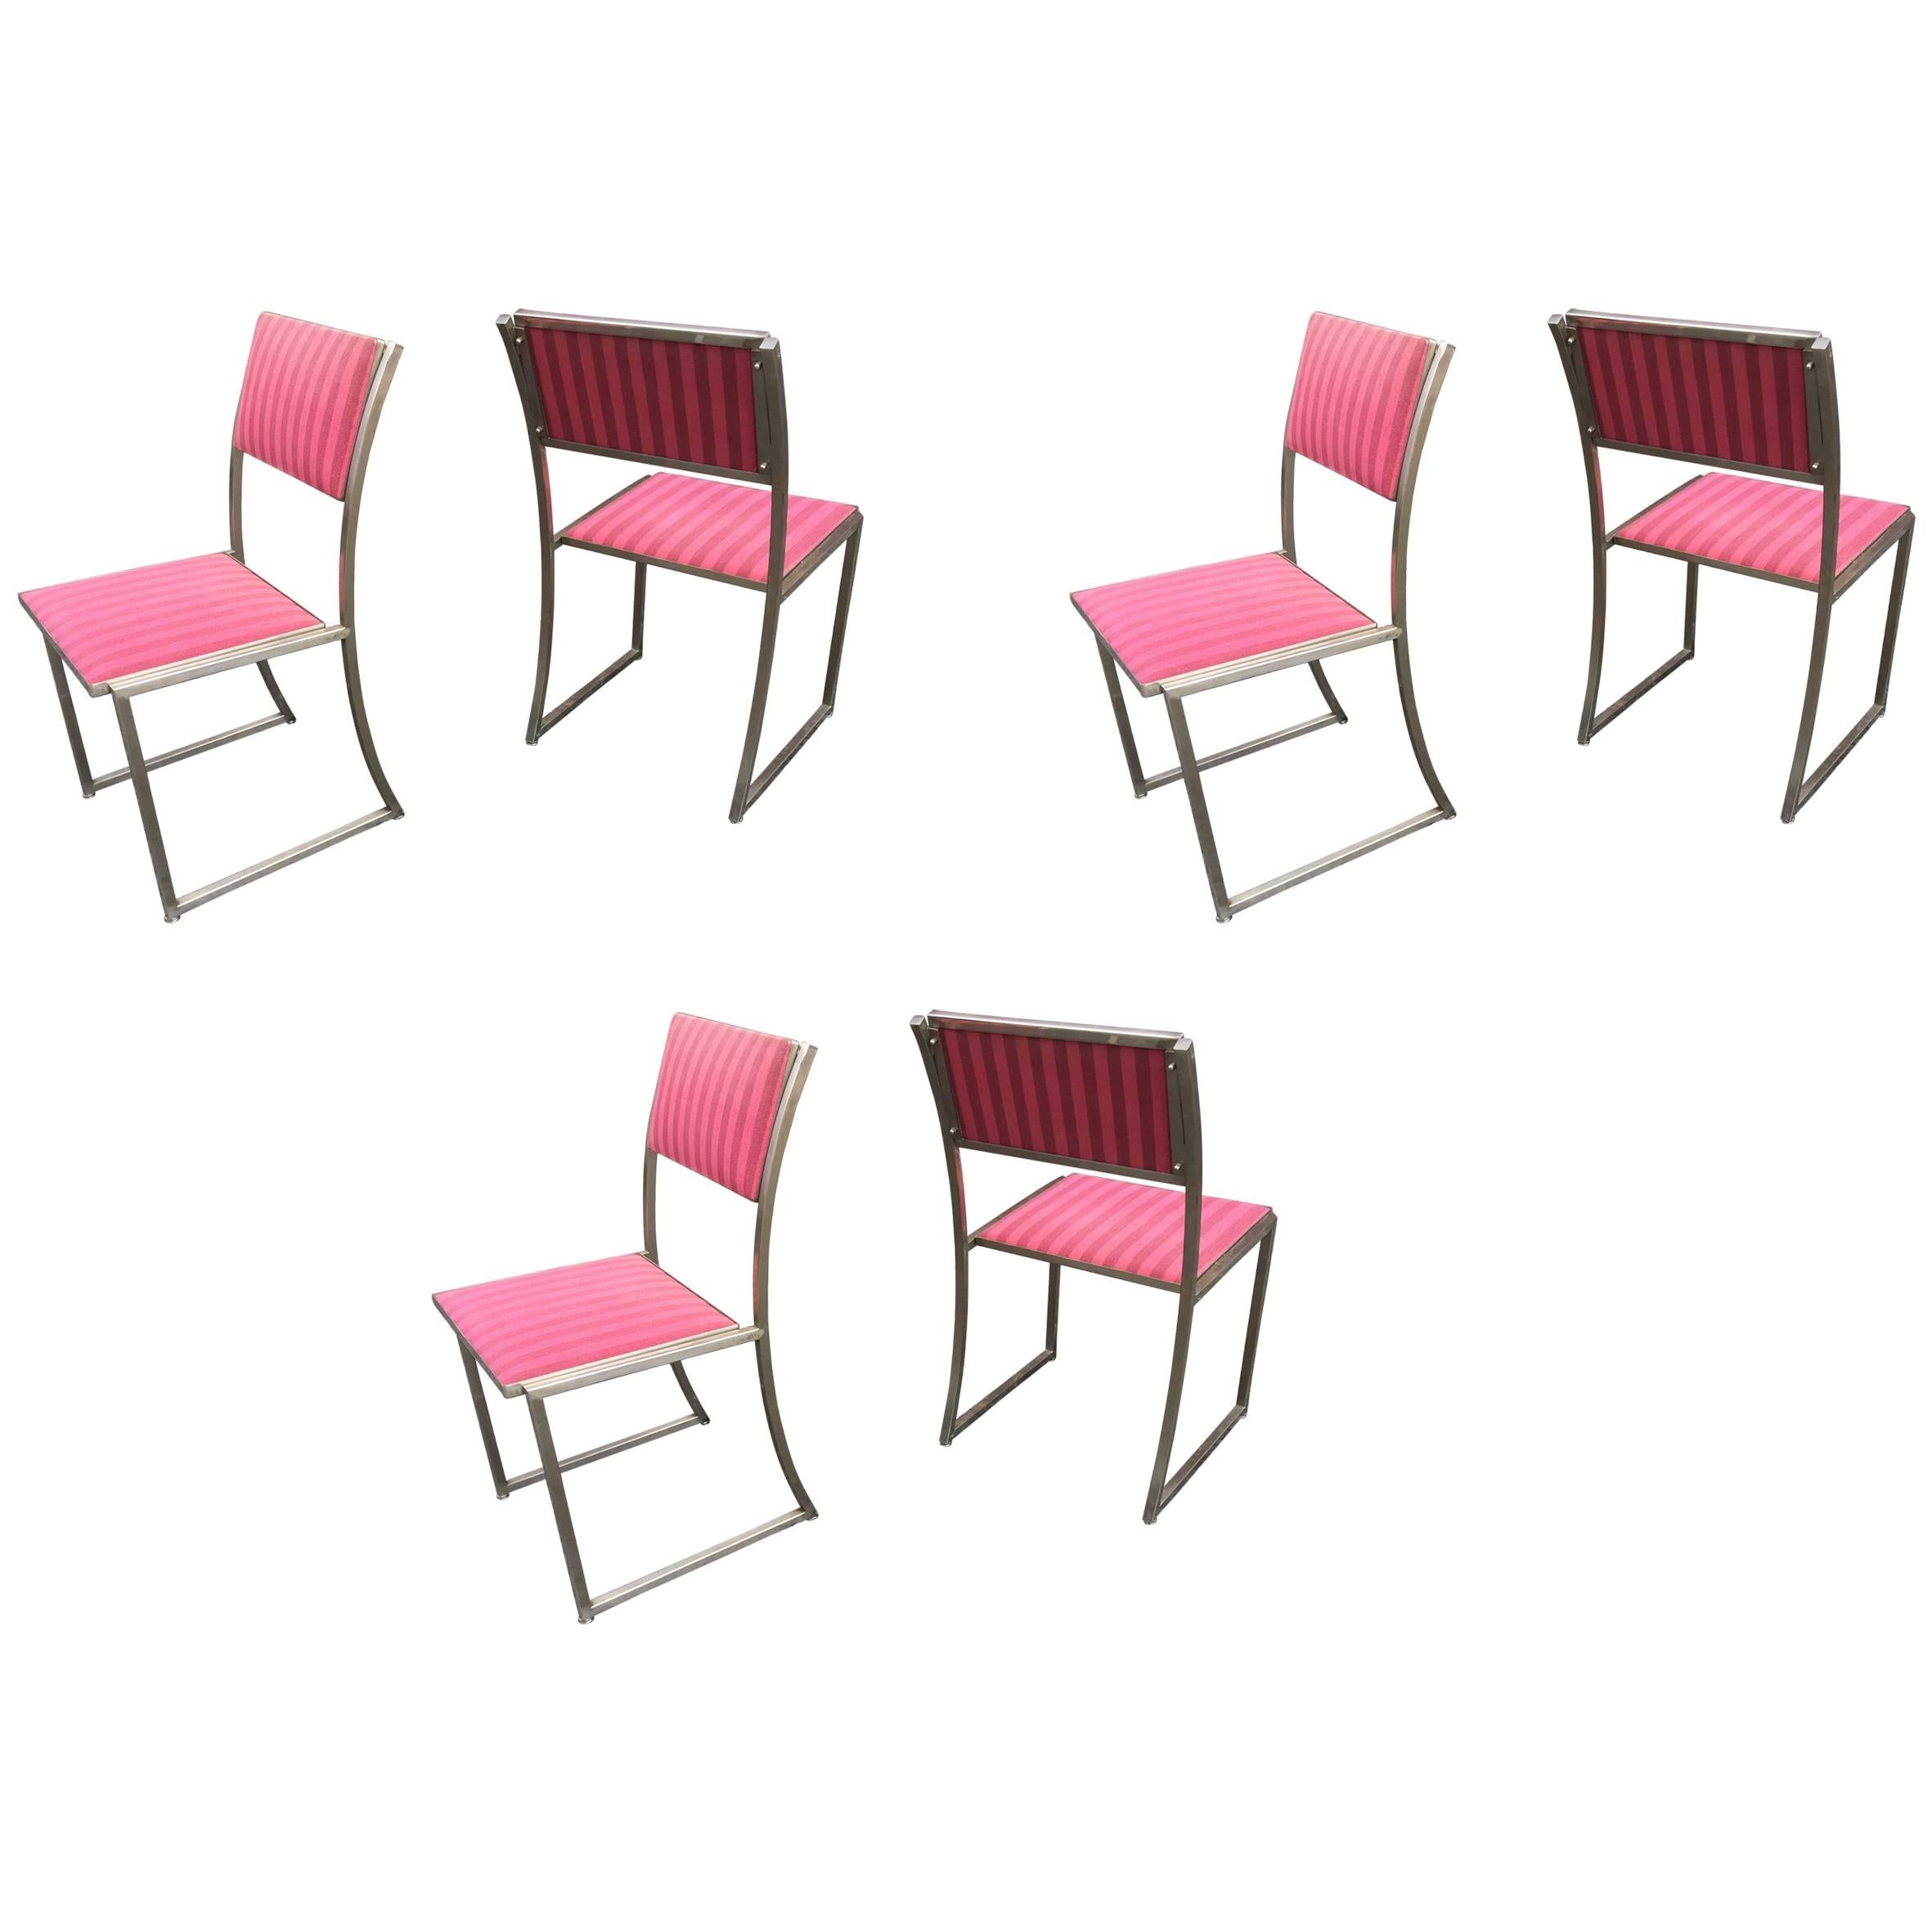 Guy Lefevre for Maison Jansen six chairs in steel.